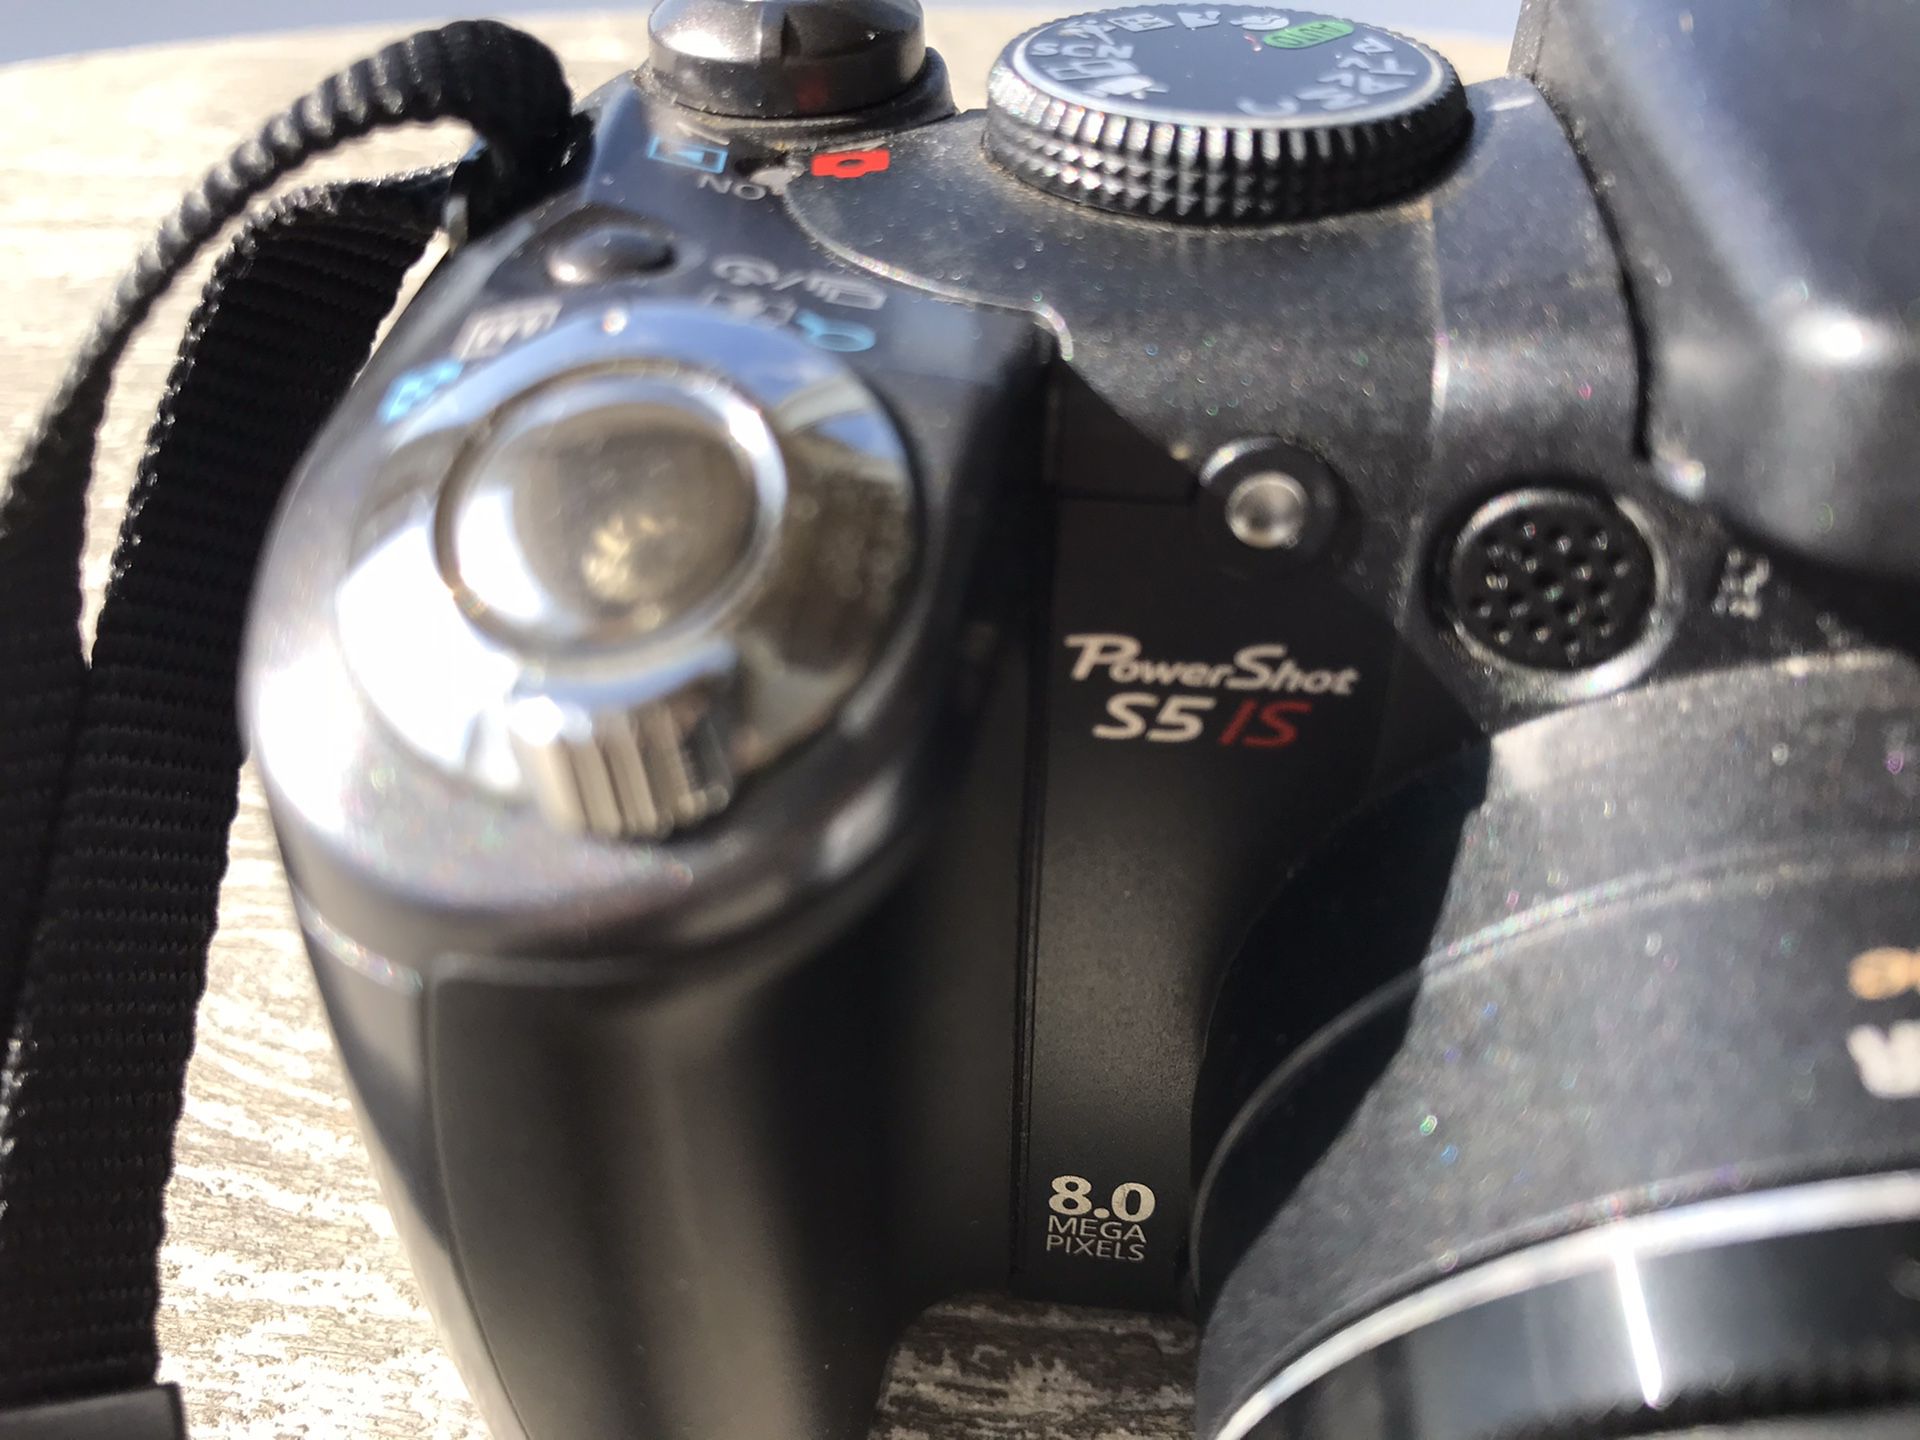 Canon Powershot S5I5 Digital Camera